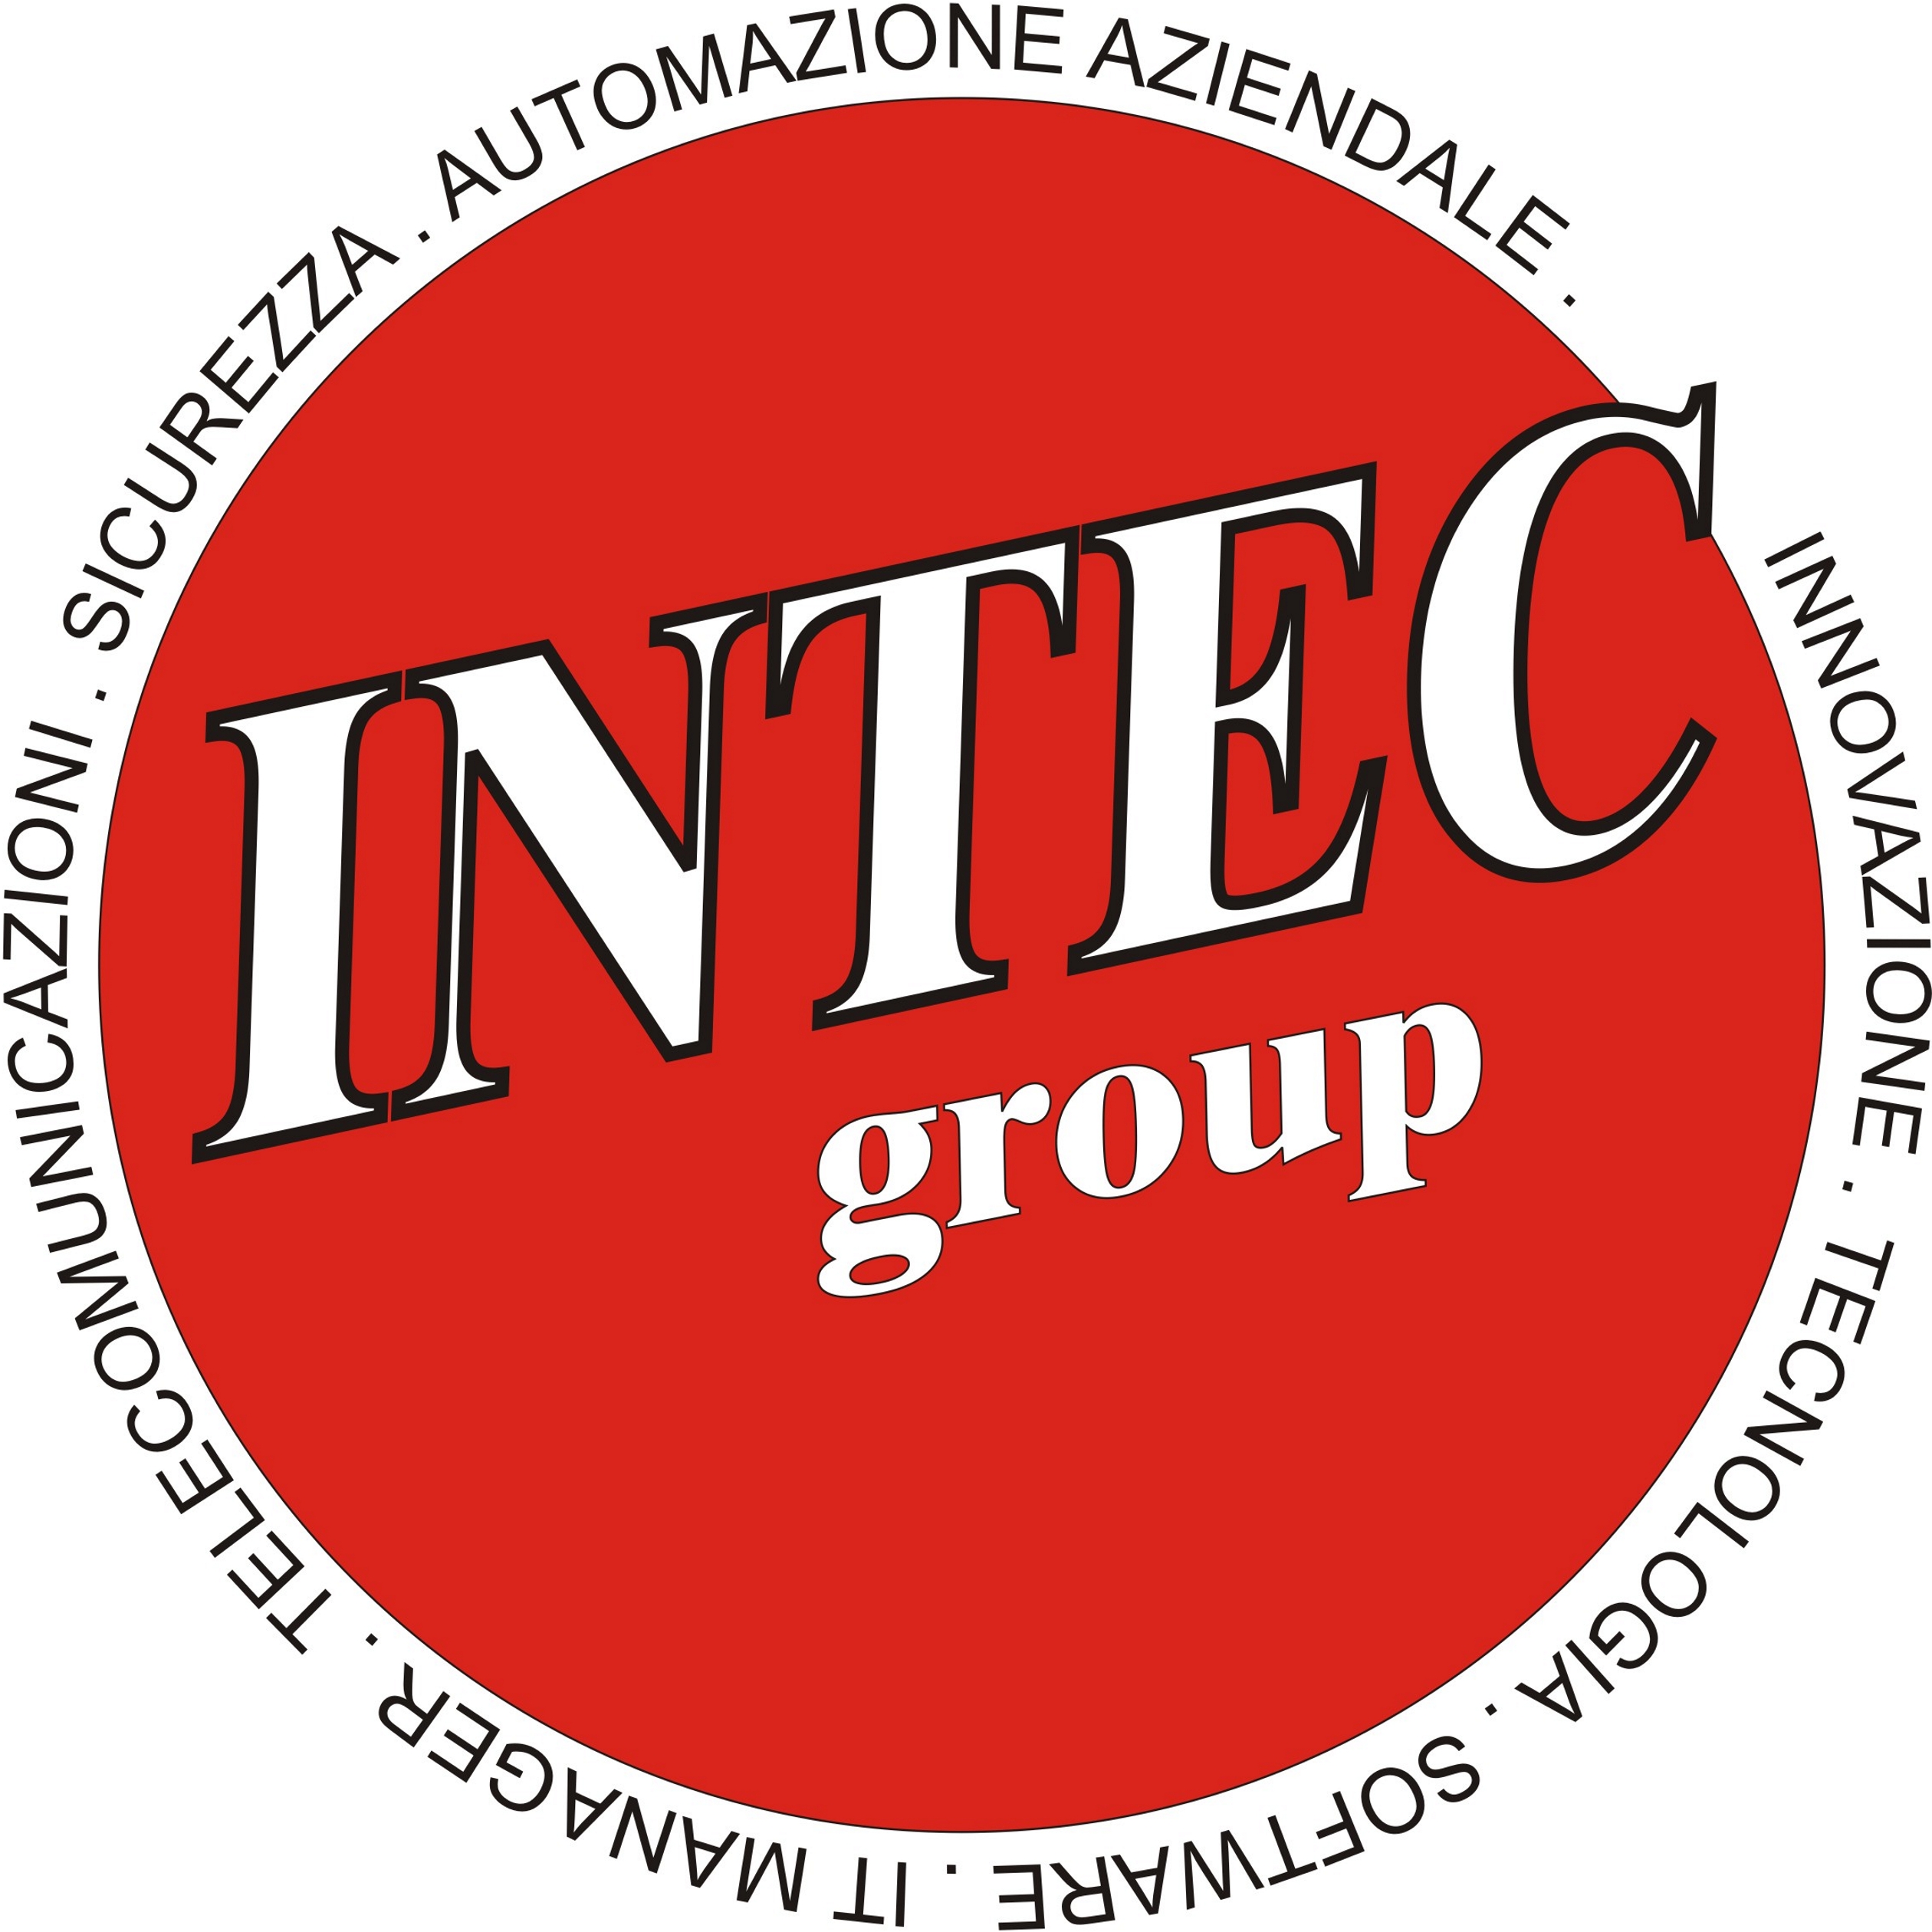 Intecgroup